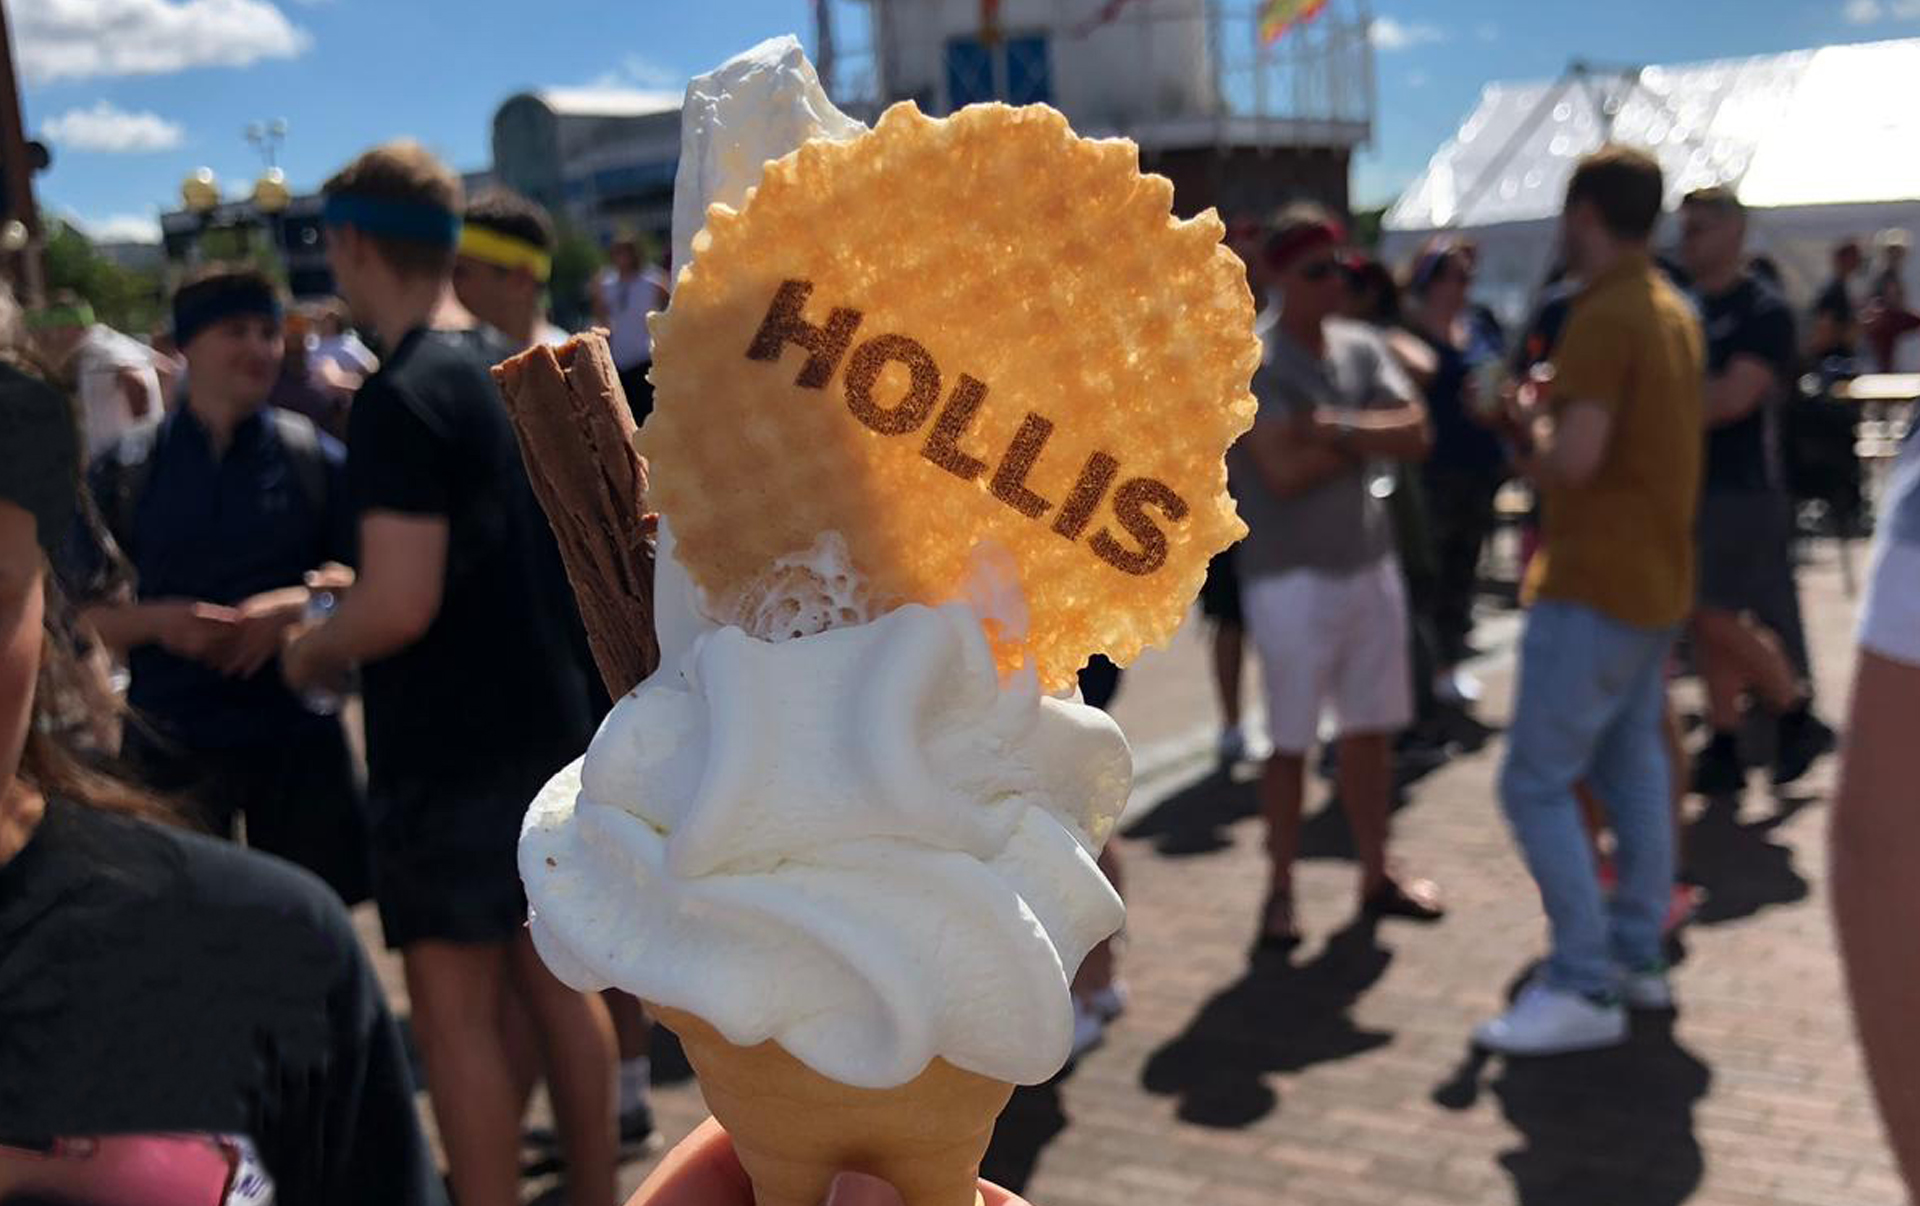 Hollis brand with logo on ice cream wafer